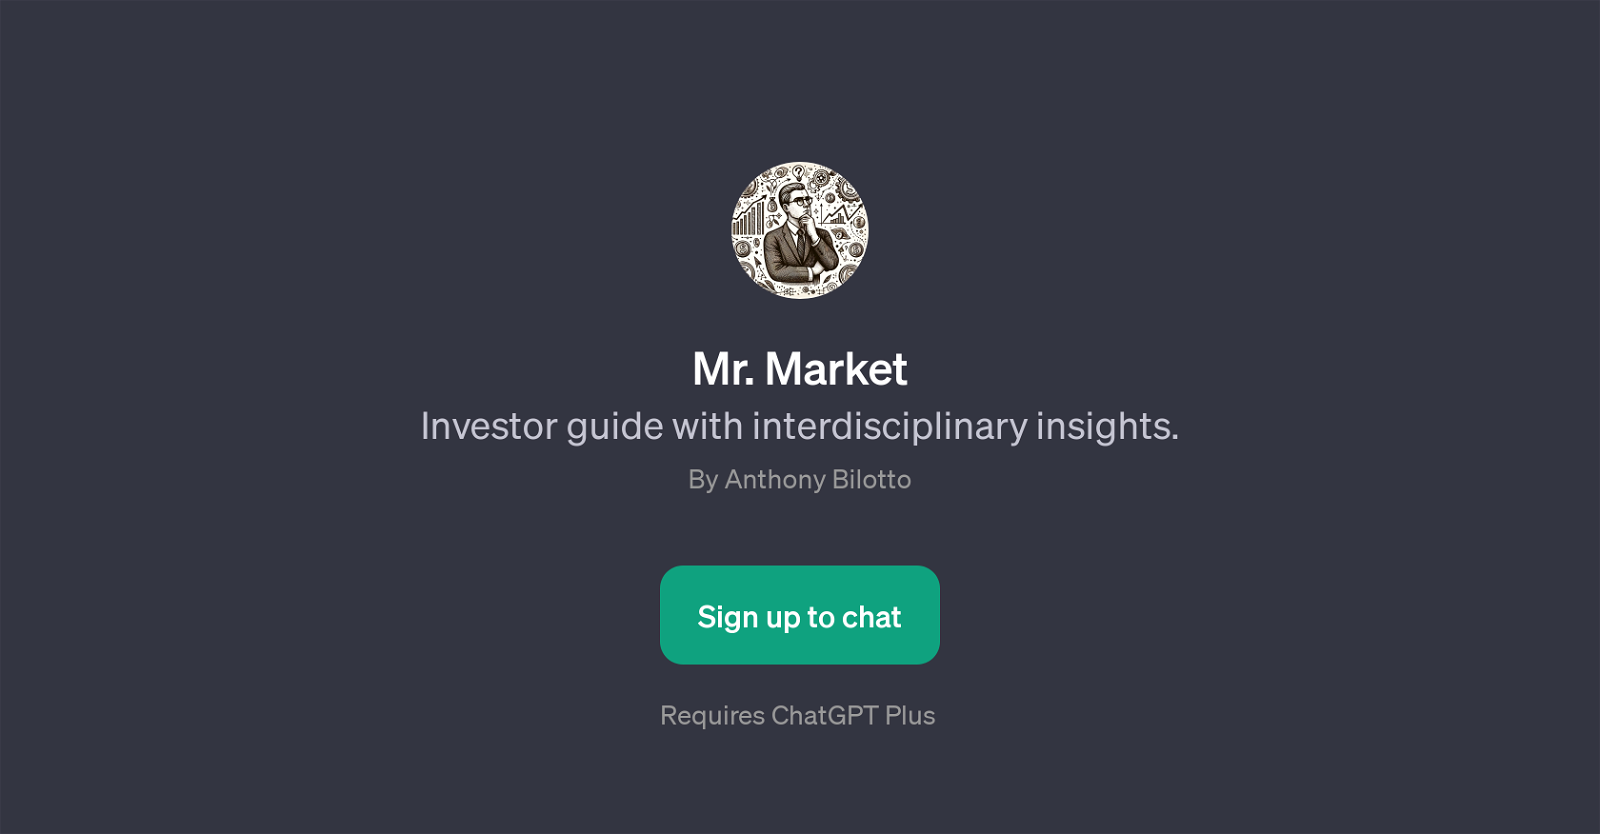 Mr. Market website